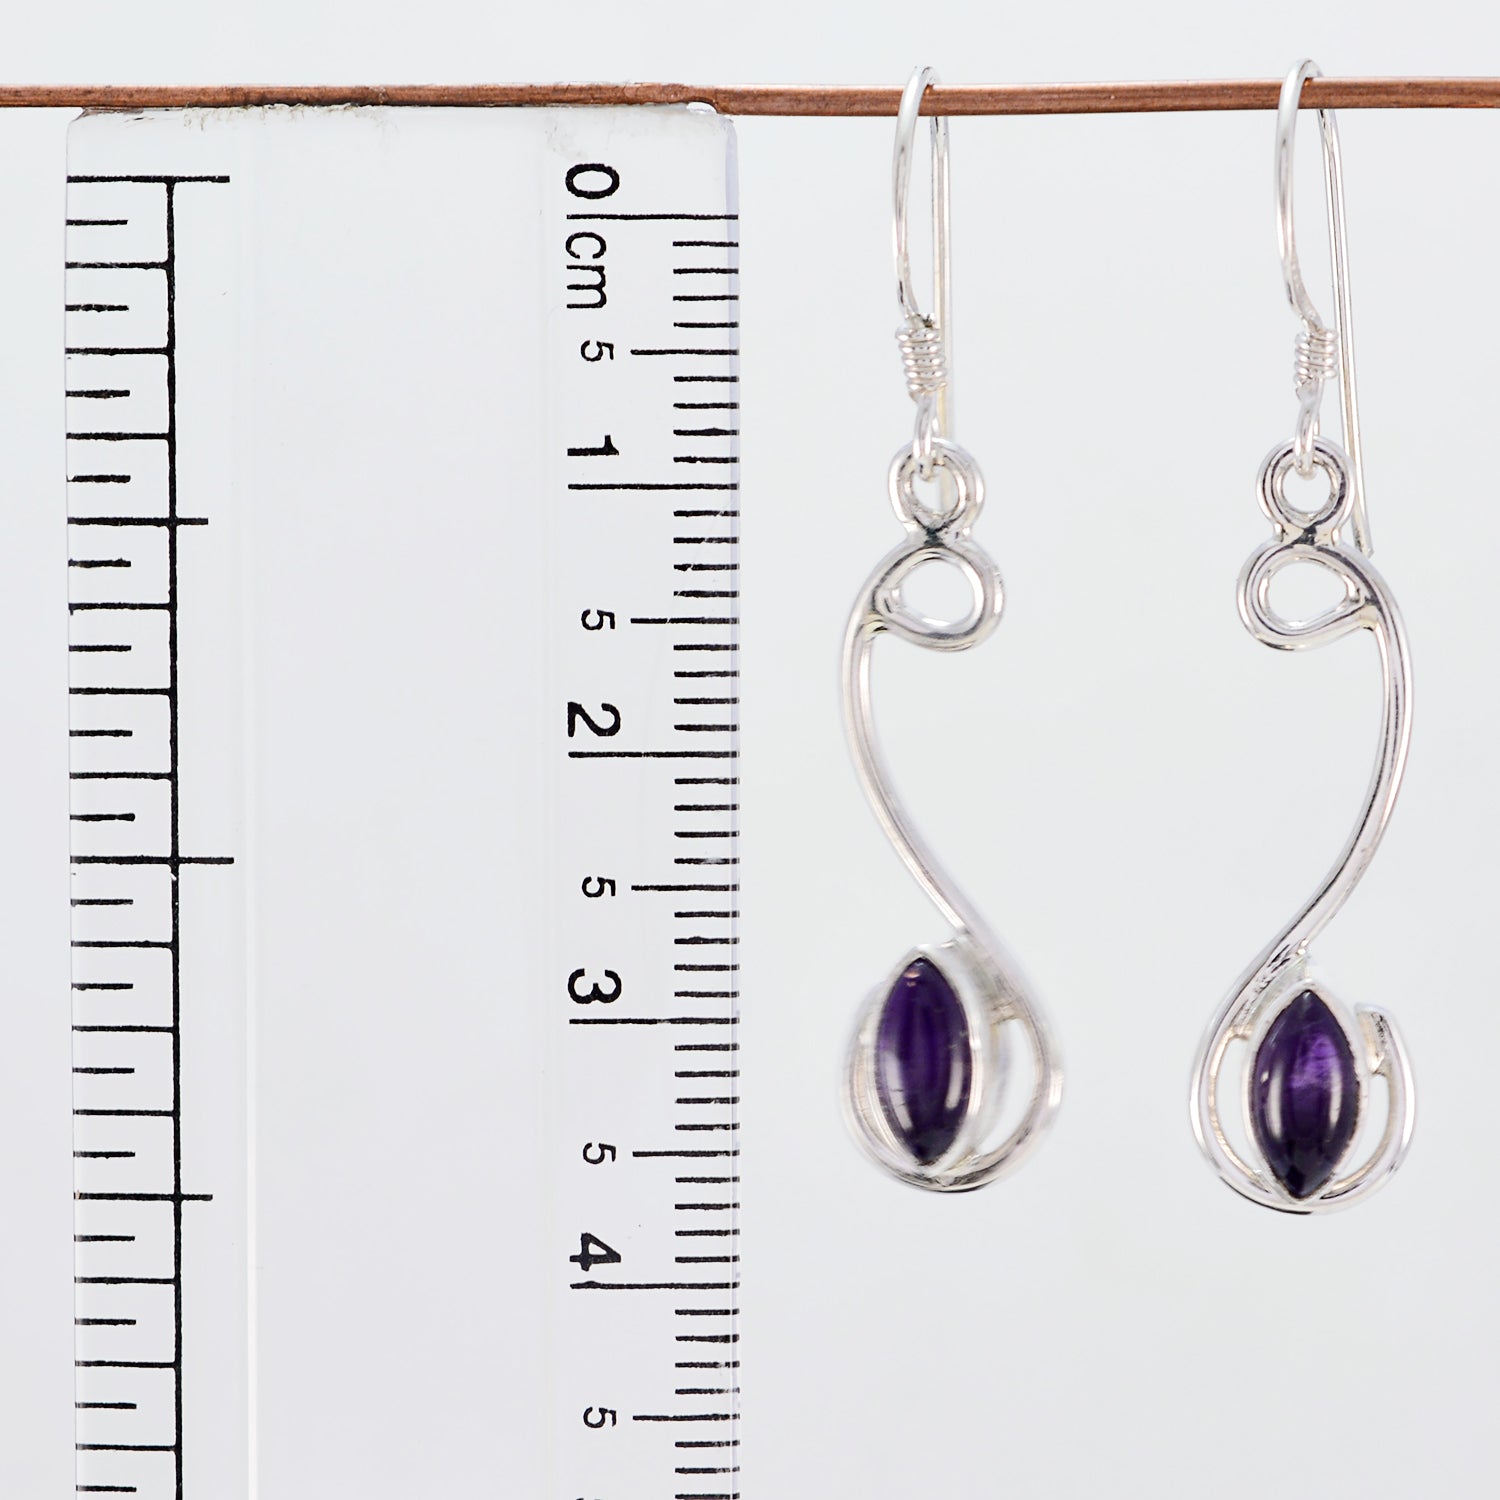 Riyo Good Gemstones marquise Cabochon Purple Amethyst Silver Earring gift for easter Sunday